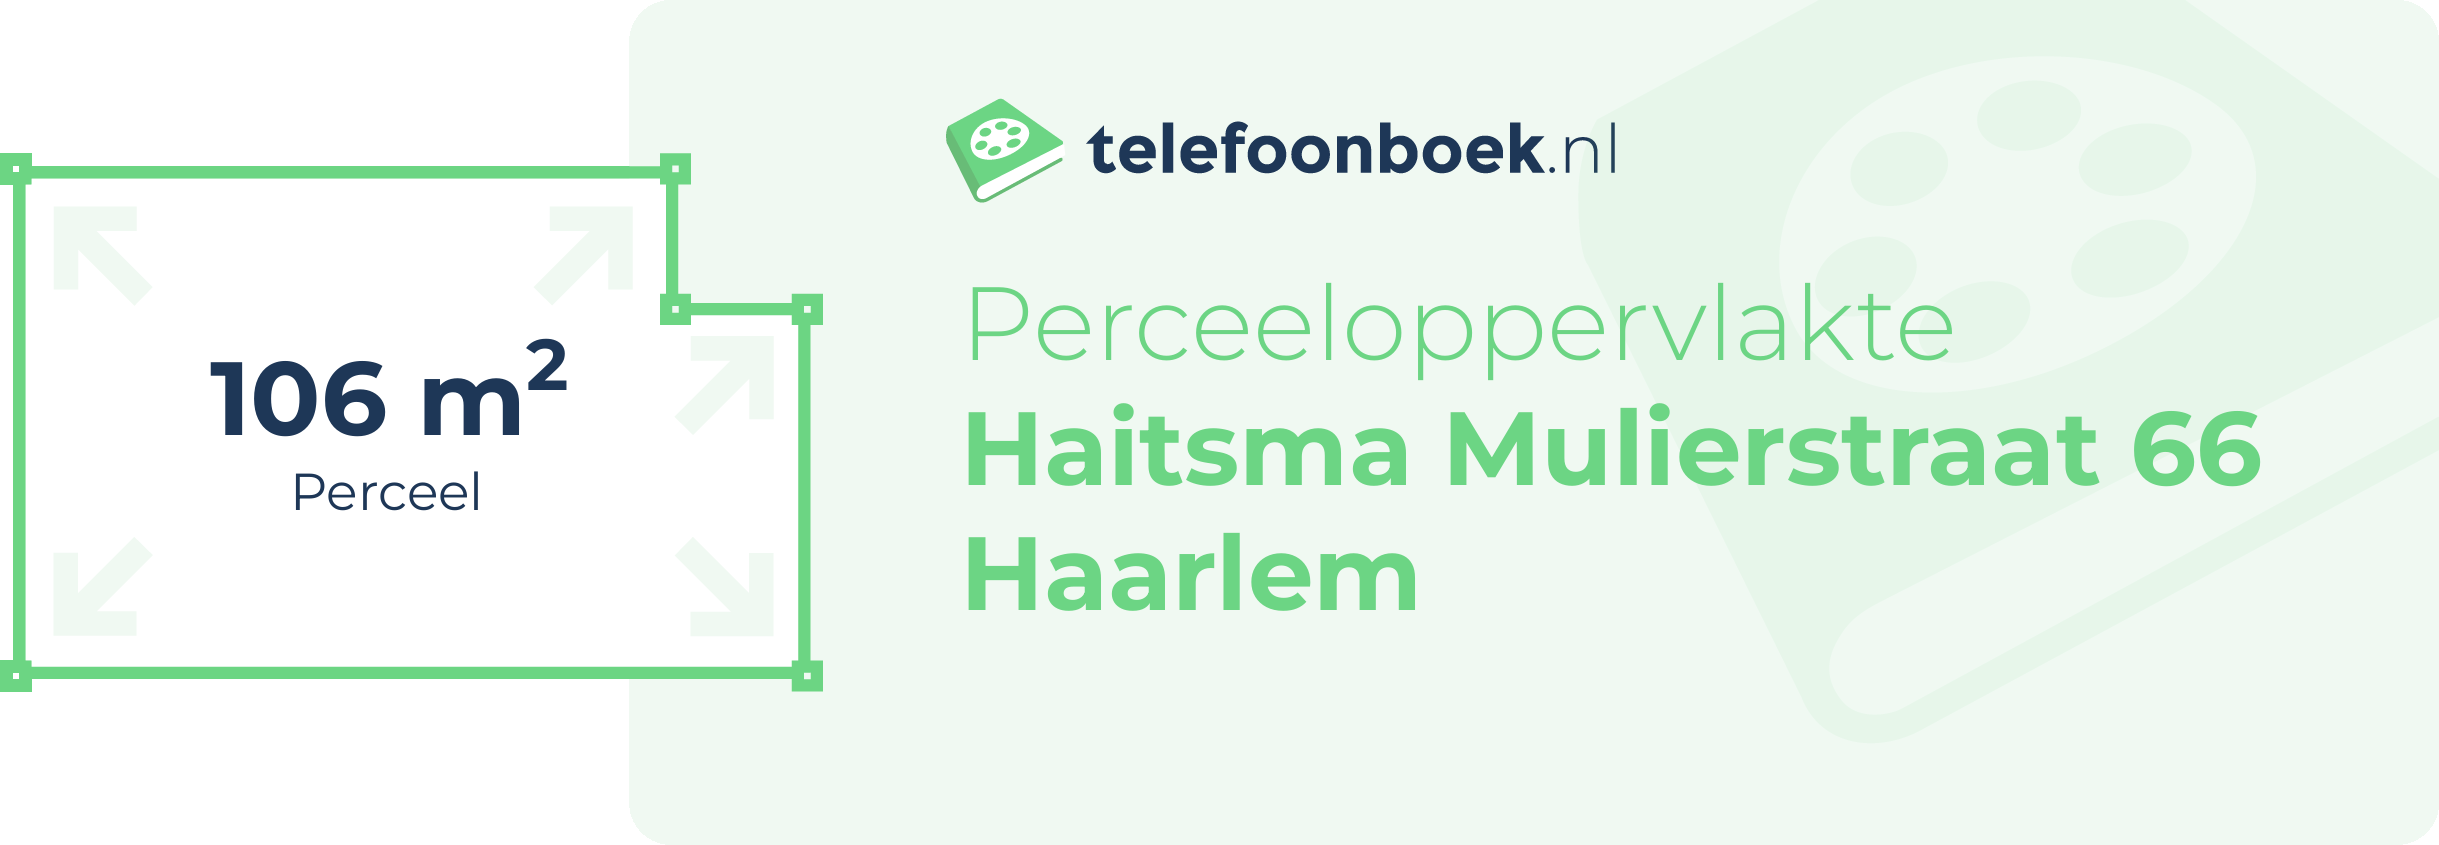 Perceeloppervlakte Haitsma Mulierstraat 66 Haarlem